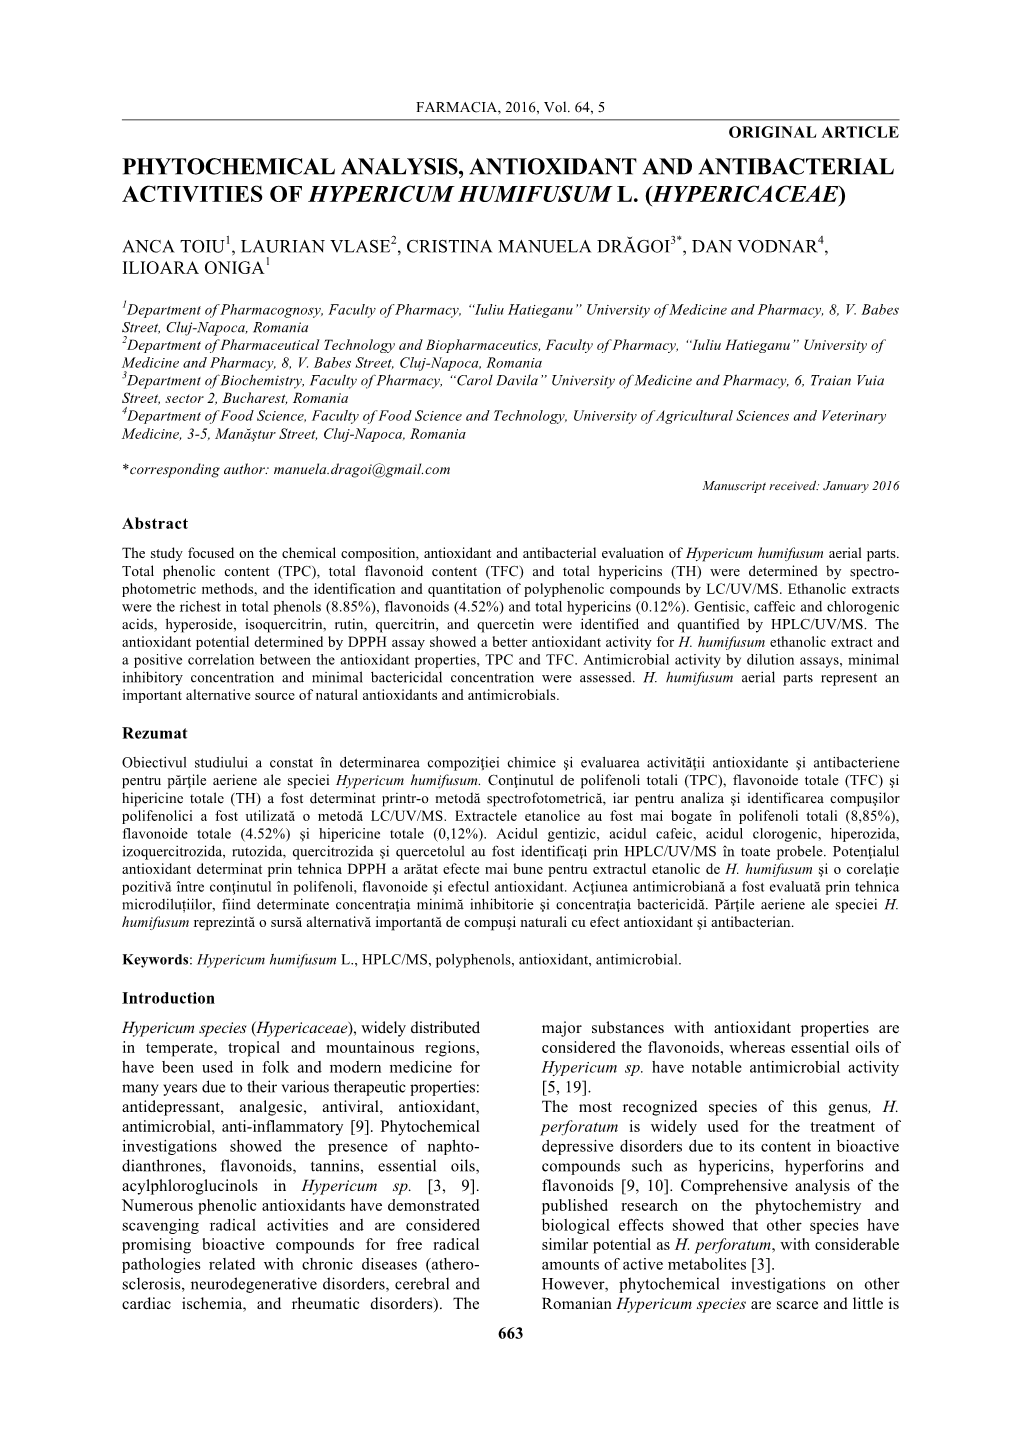 Phytochemical Analysis, Antioxidant and Antibacterial Activities of Hypericum Humifusum L